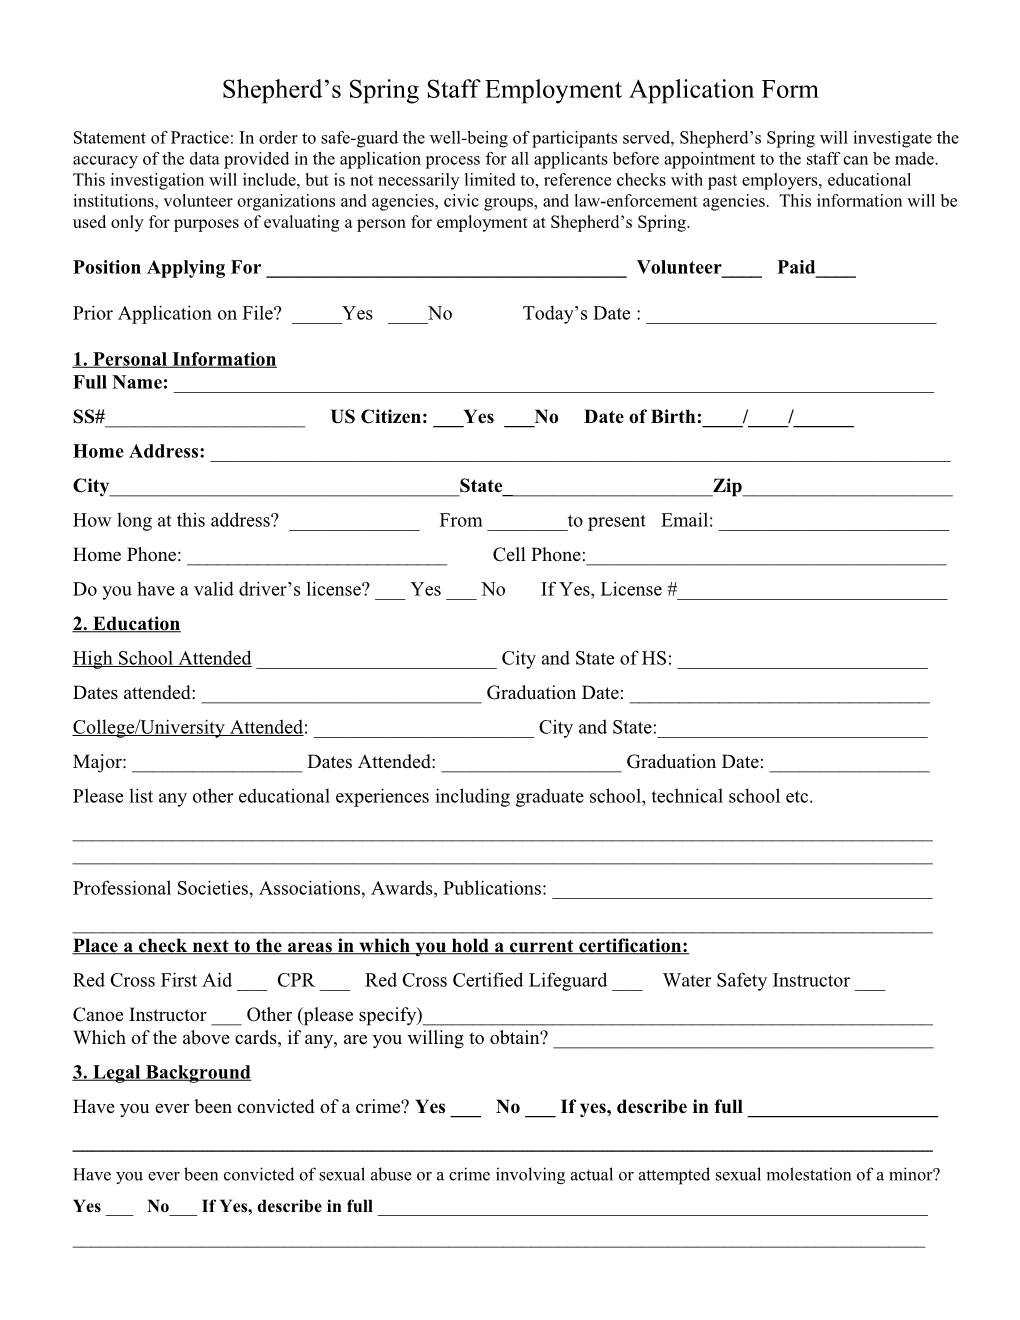 Shepherd S Spring Summer Staff Application Form